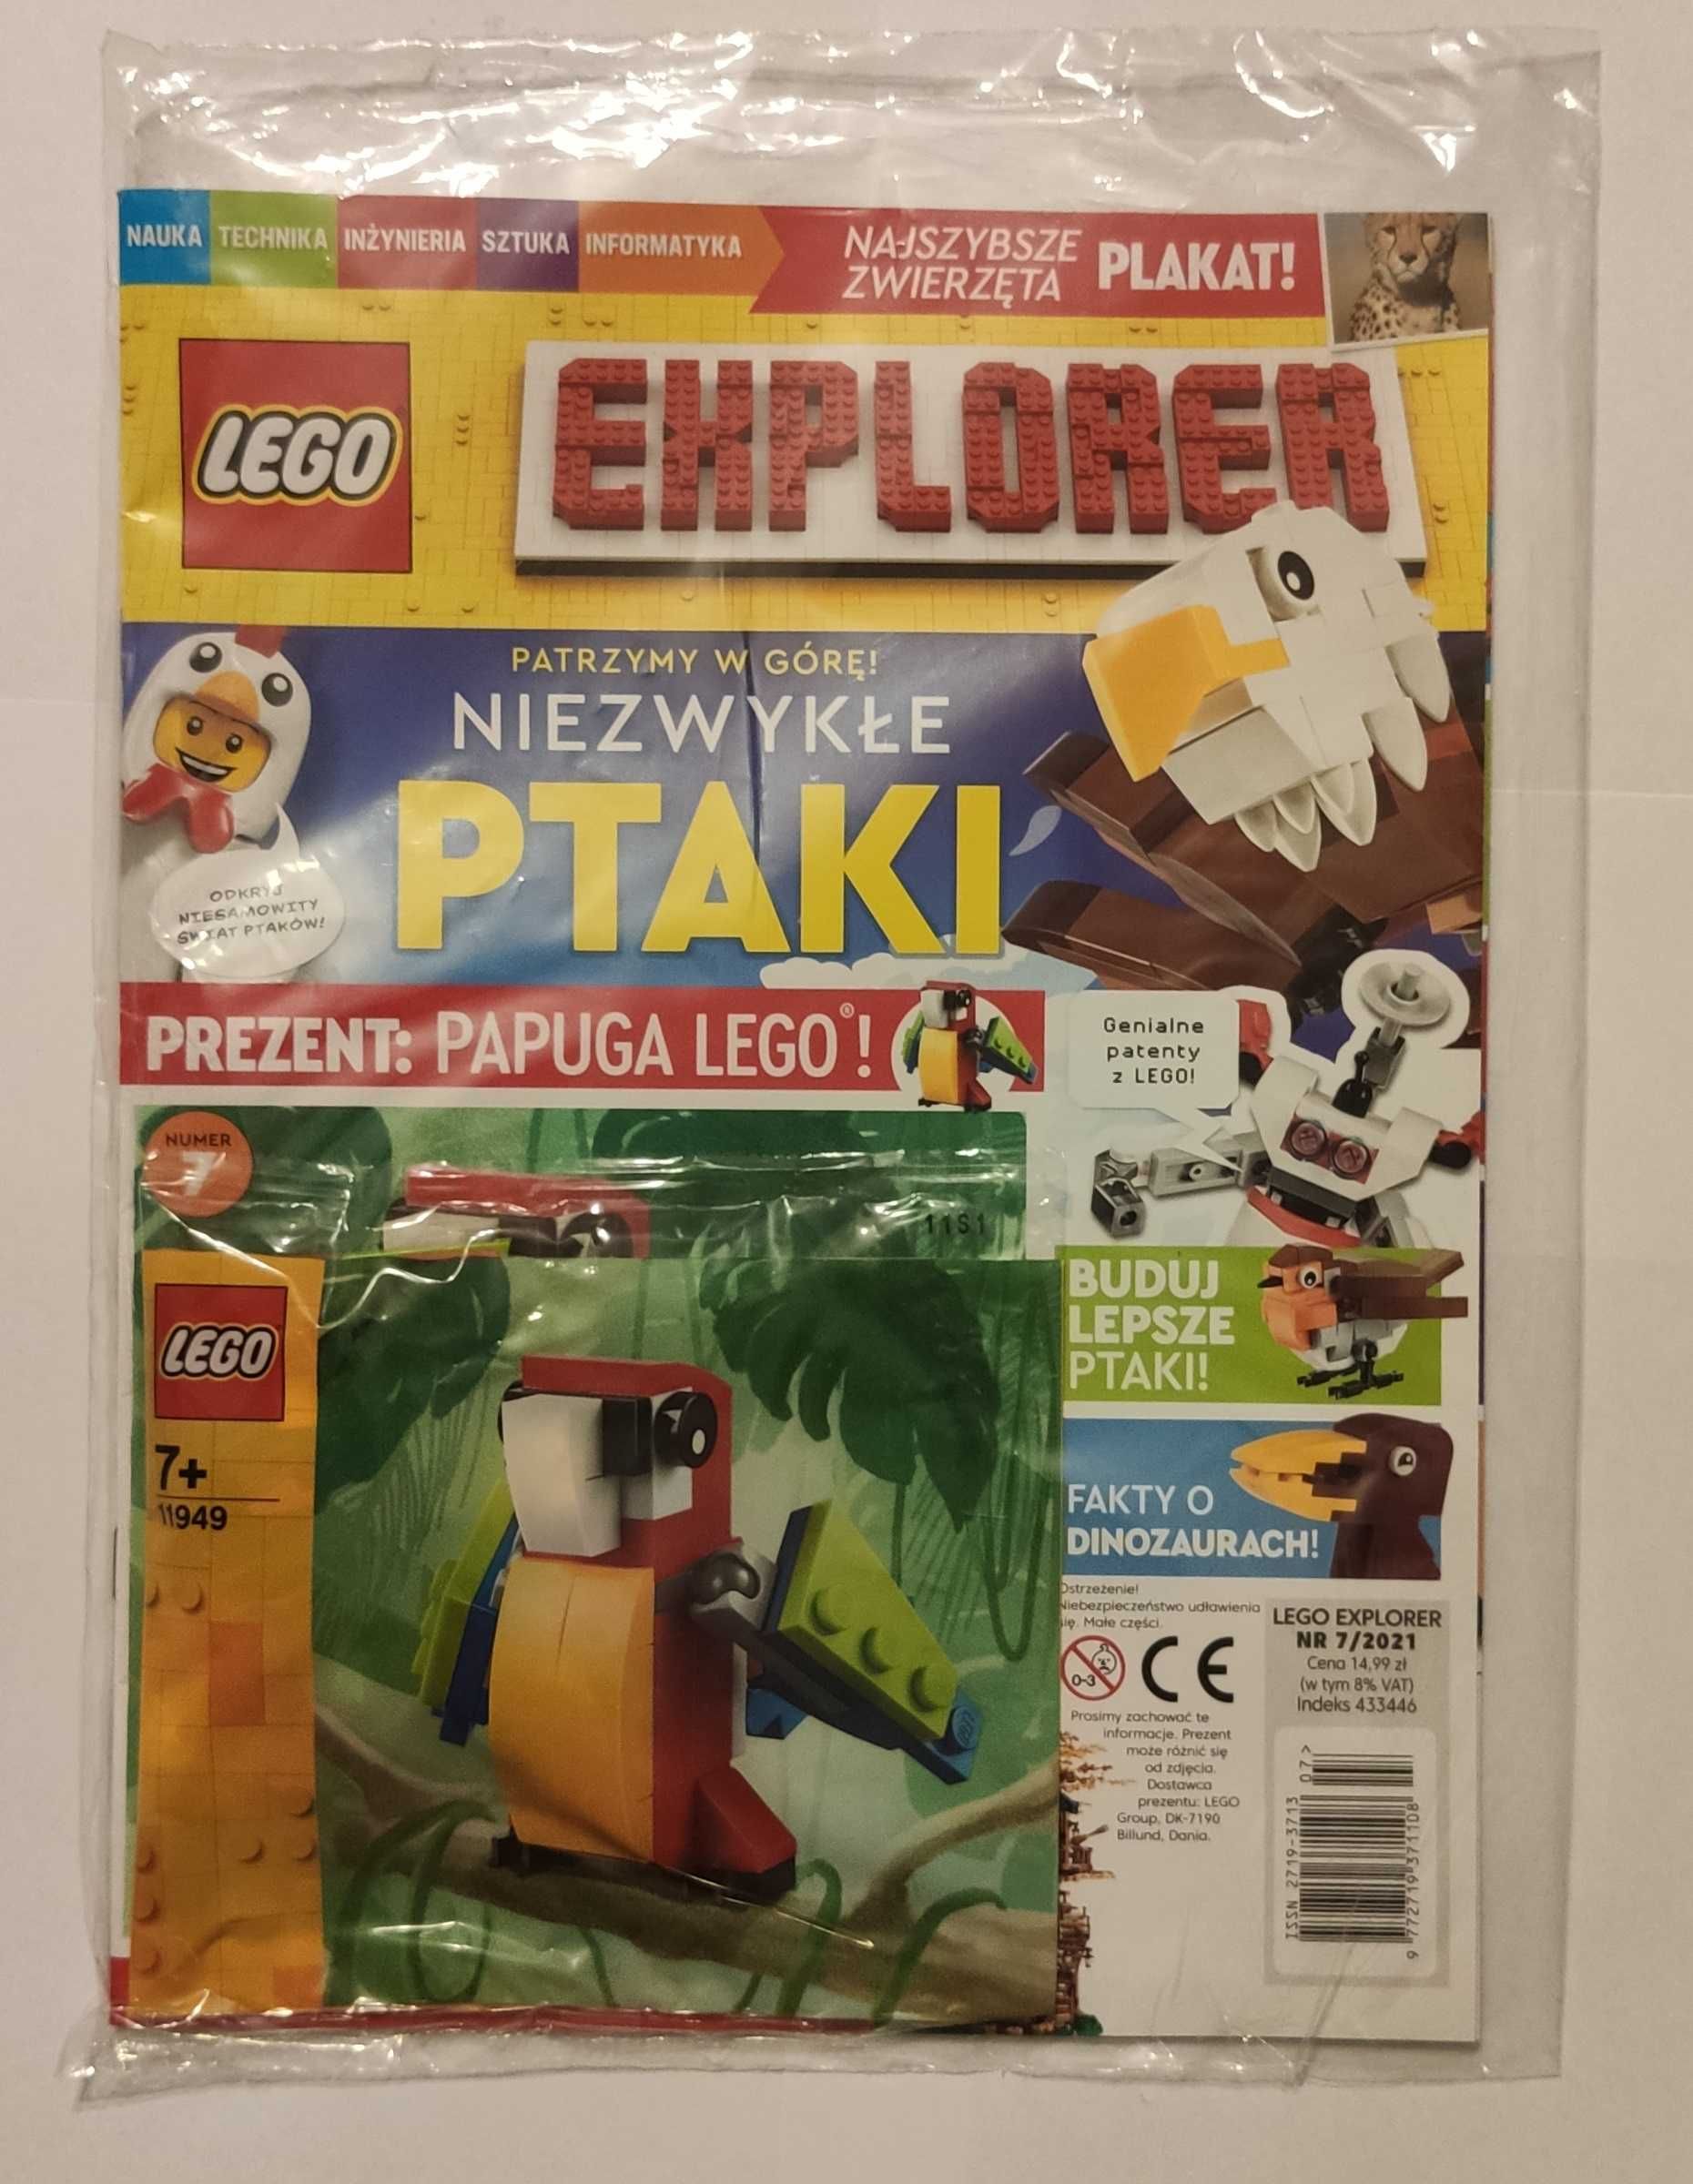 Magazyn Czasopismo LEGO EXPLORER - 07/2021 - Papuga